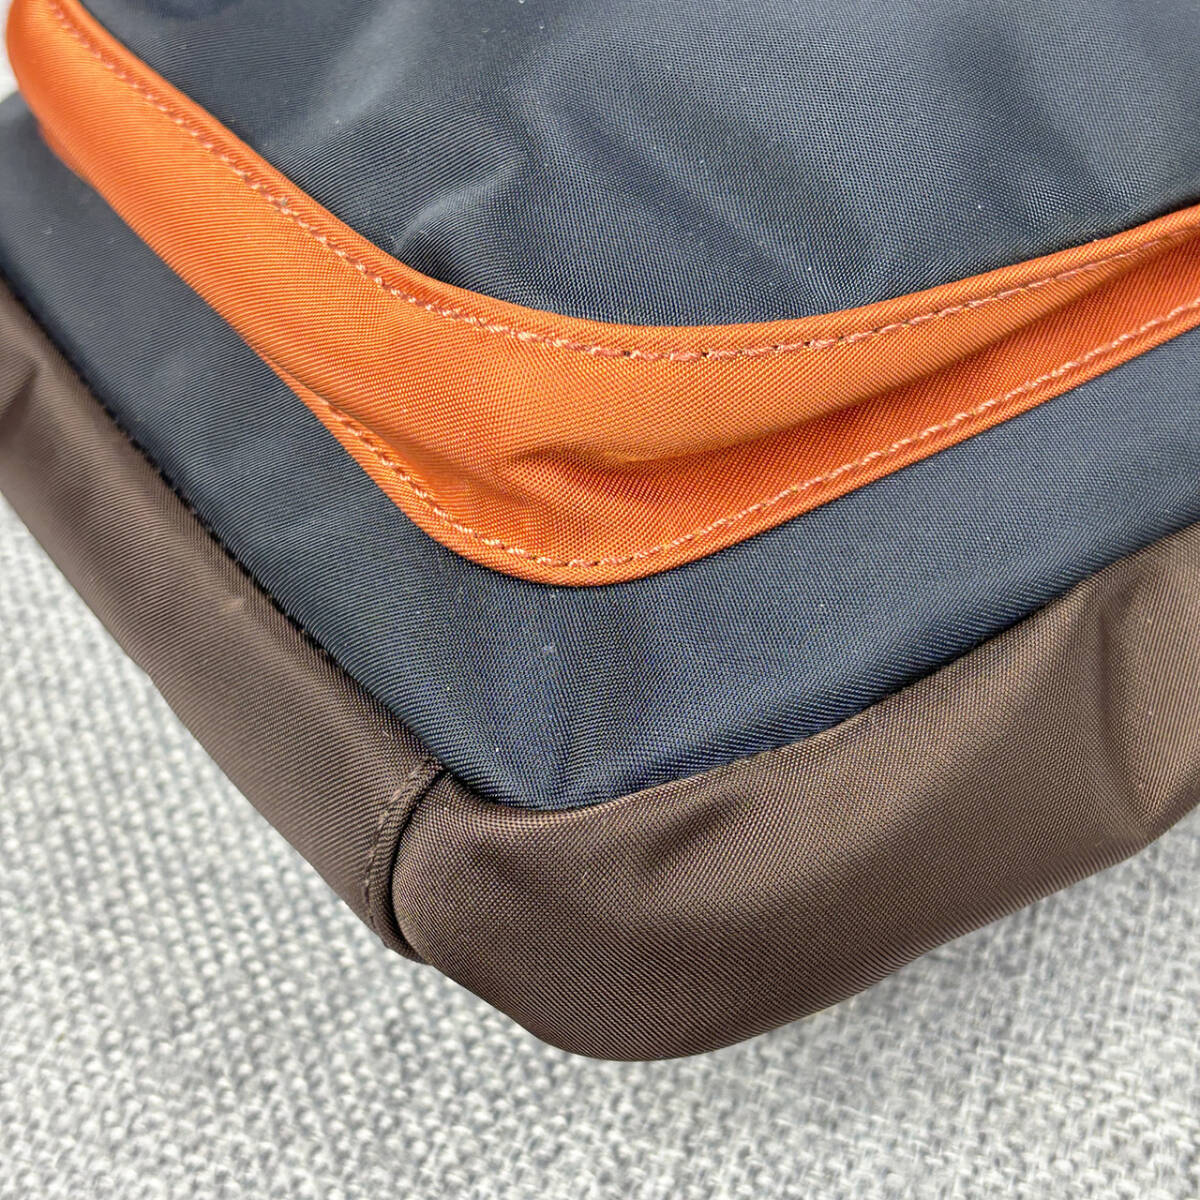  unused *Paul Smith Paul Smith men's body bag PSN310 nylon & original leather navy blue × dense brown × orange 